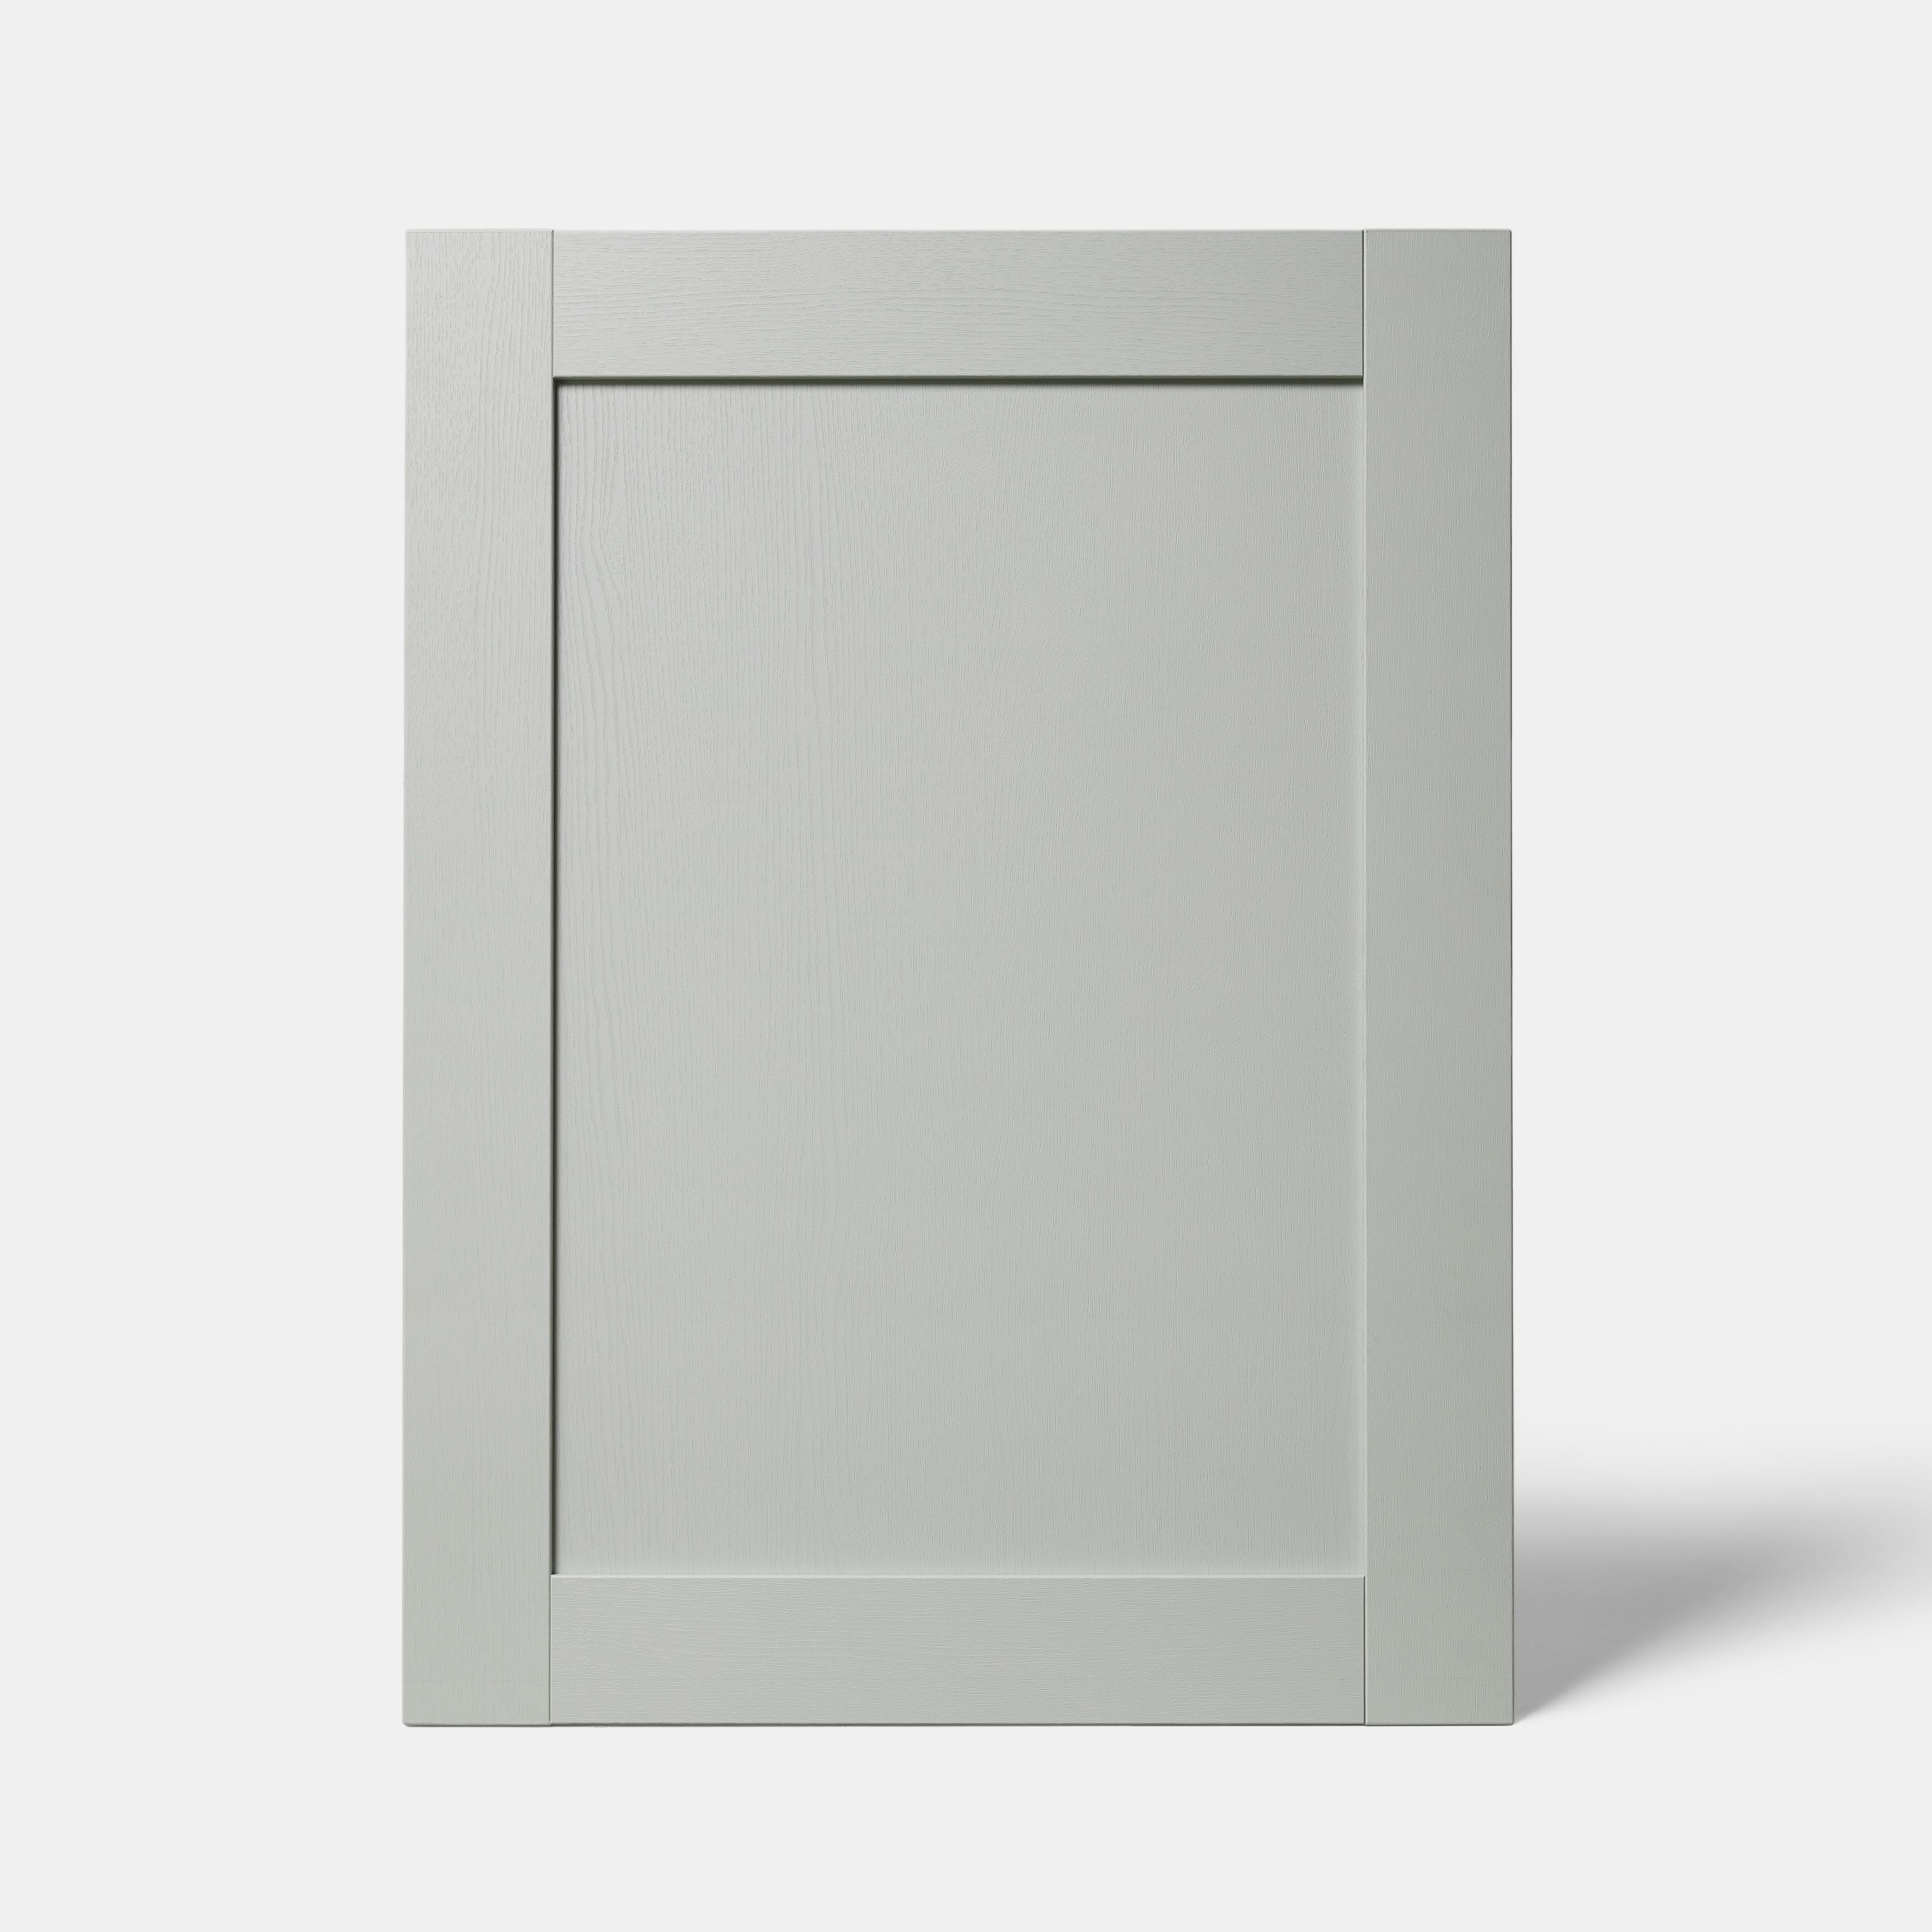 GoodHome Alpinia Matt grey painted wood effect shaker Tall appliance Cabinet door (W)600mm (H)806mm (T)18mm